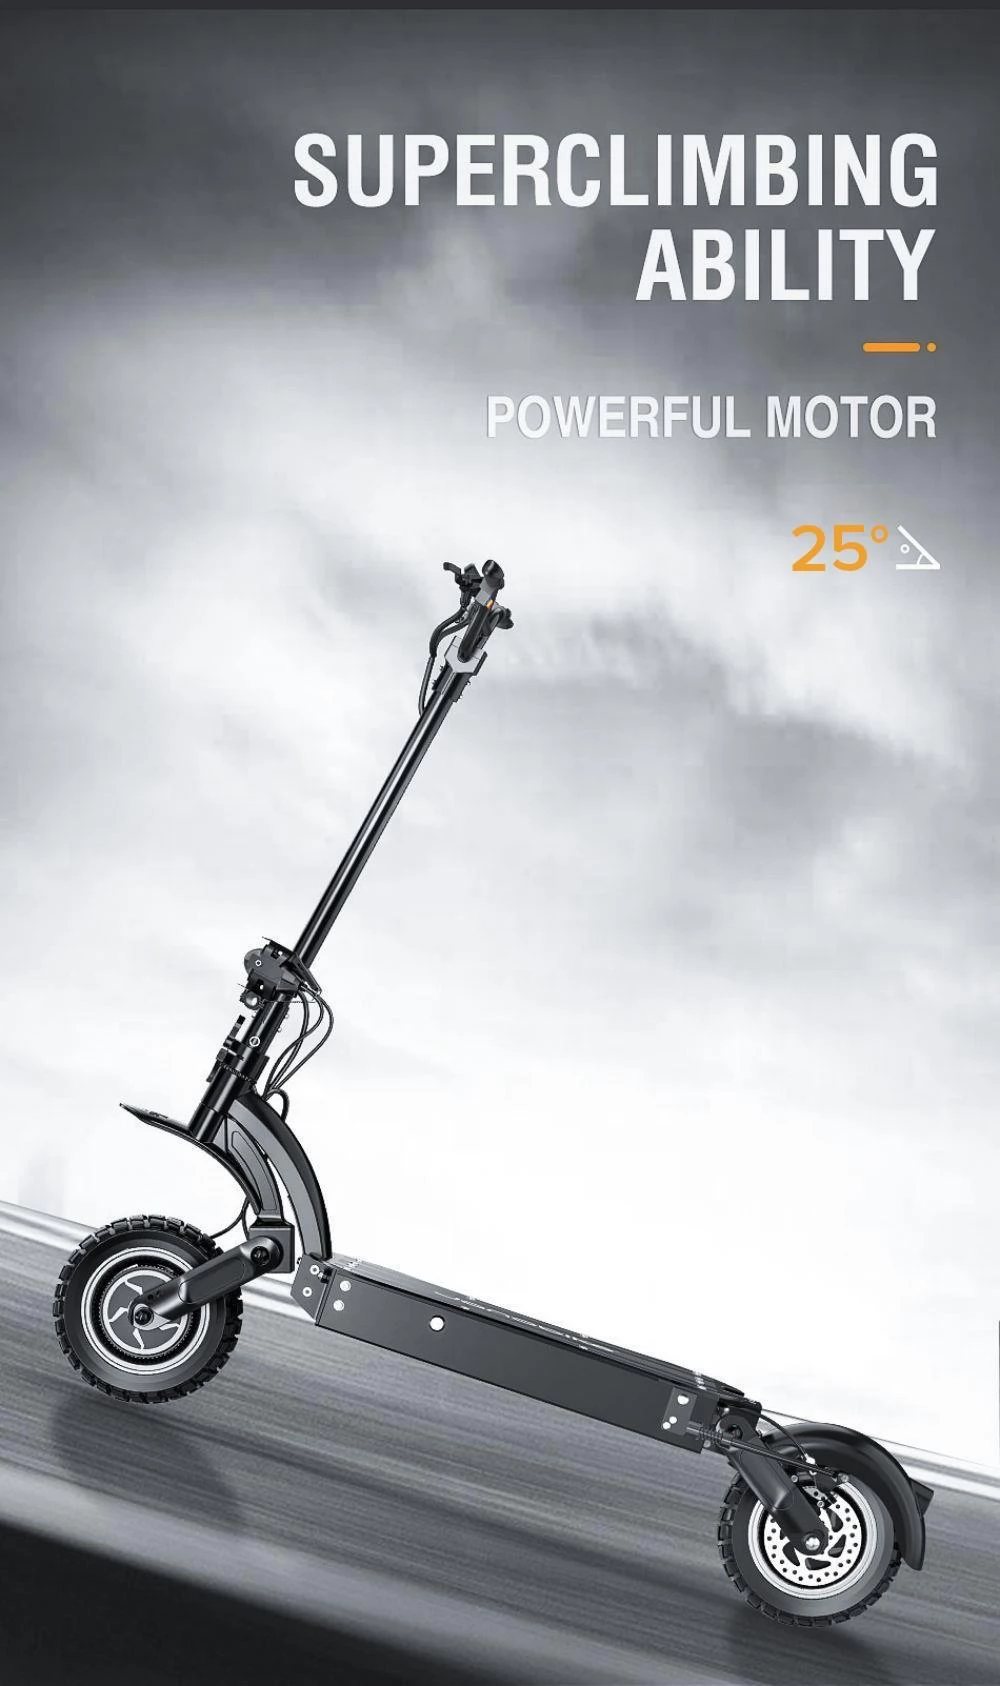 JANOBIKE X20 10 inch rubberen banden elektrische scooter hydraulische remsysteem - 1200W * 2 motor & 52V 23.4Ah batterij